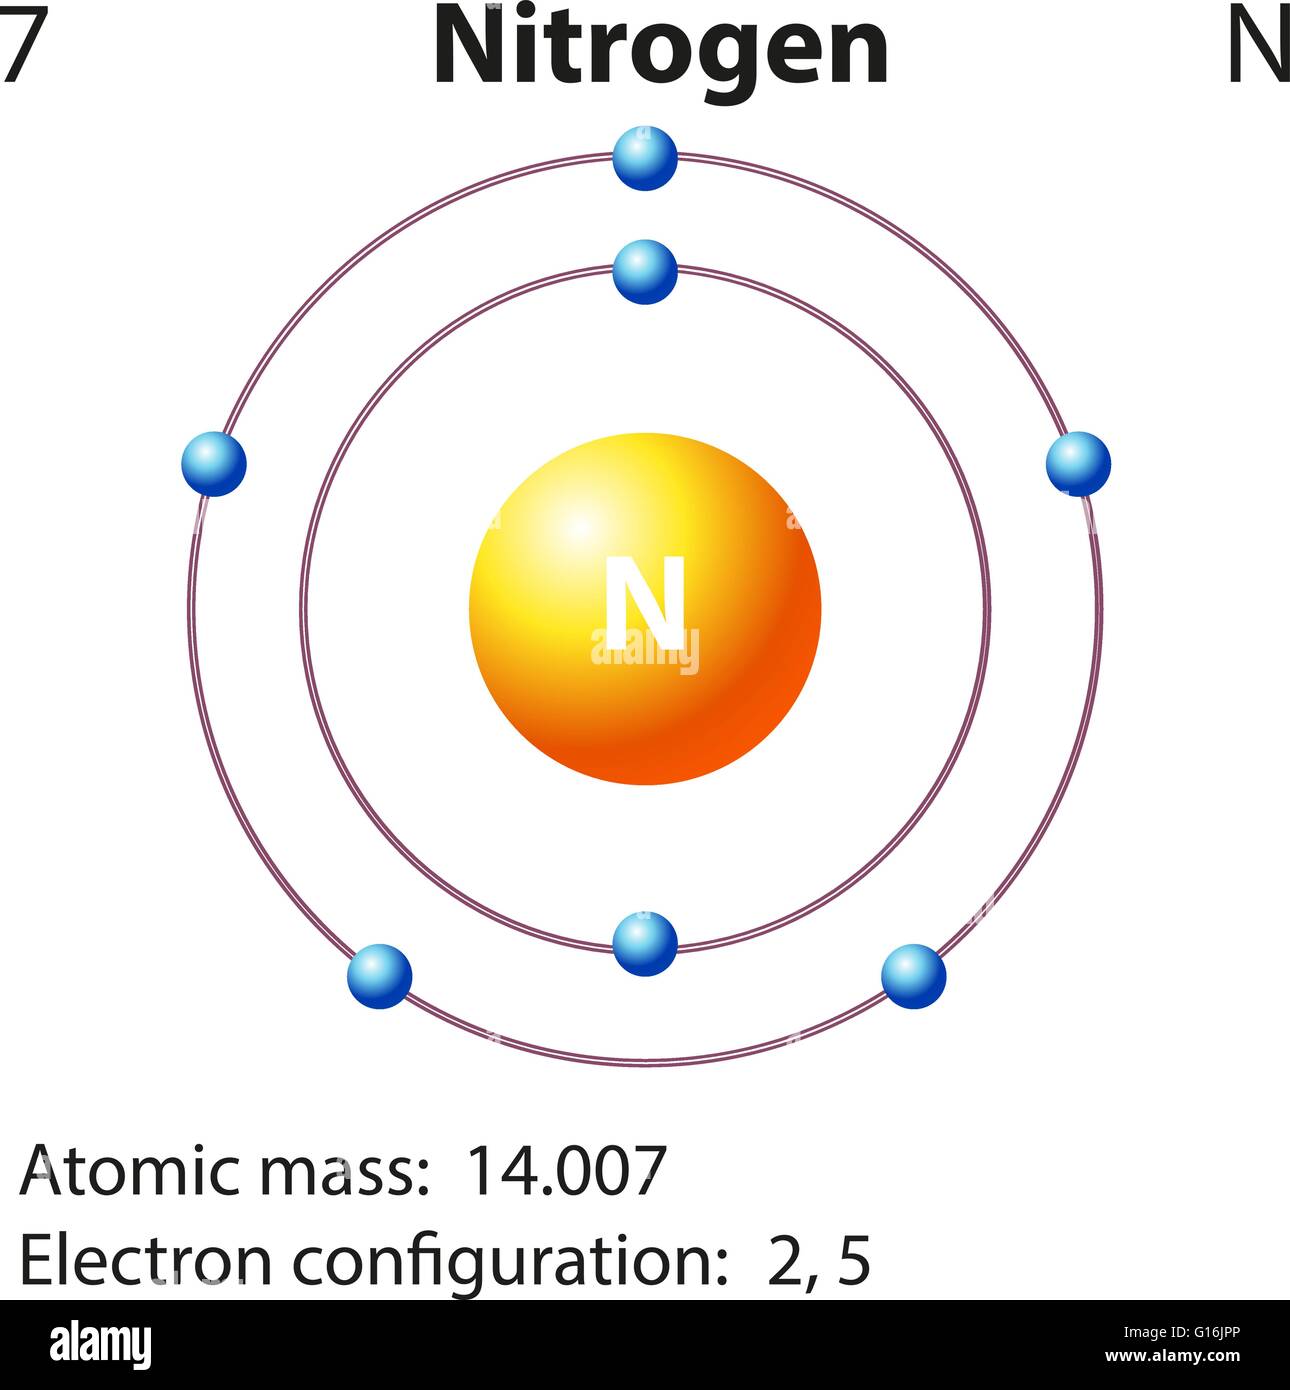 [DIAGRAM] Liquid Nitrogen Diagram - MYDIAGRAM.ONLINE